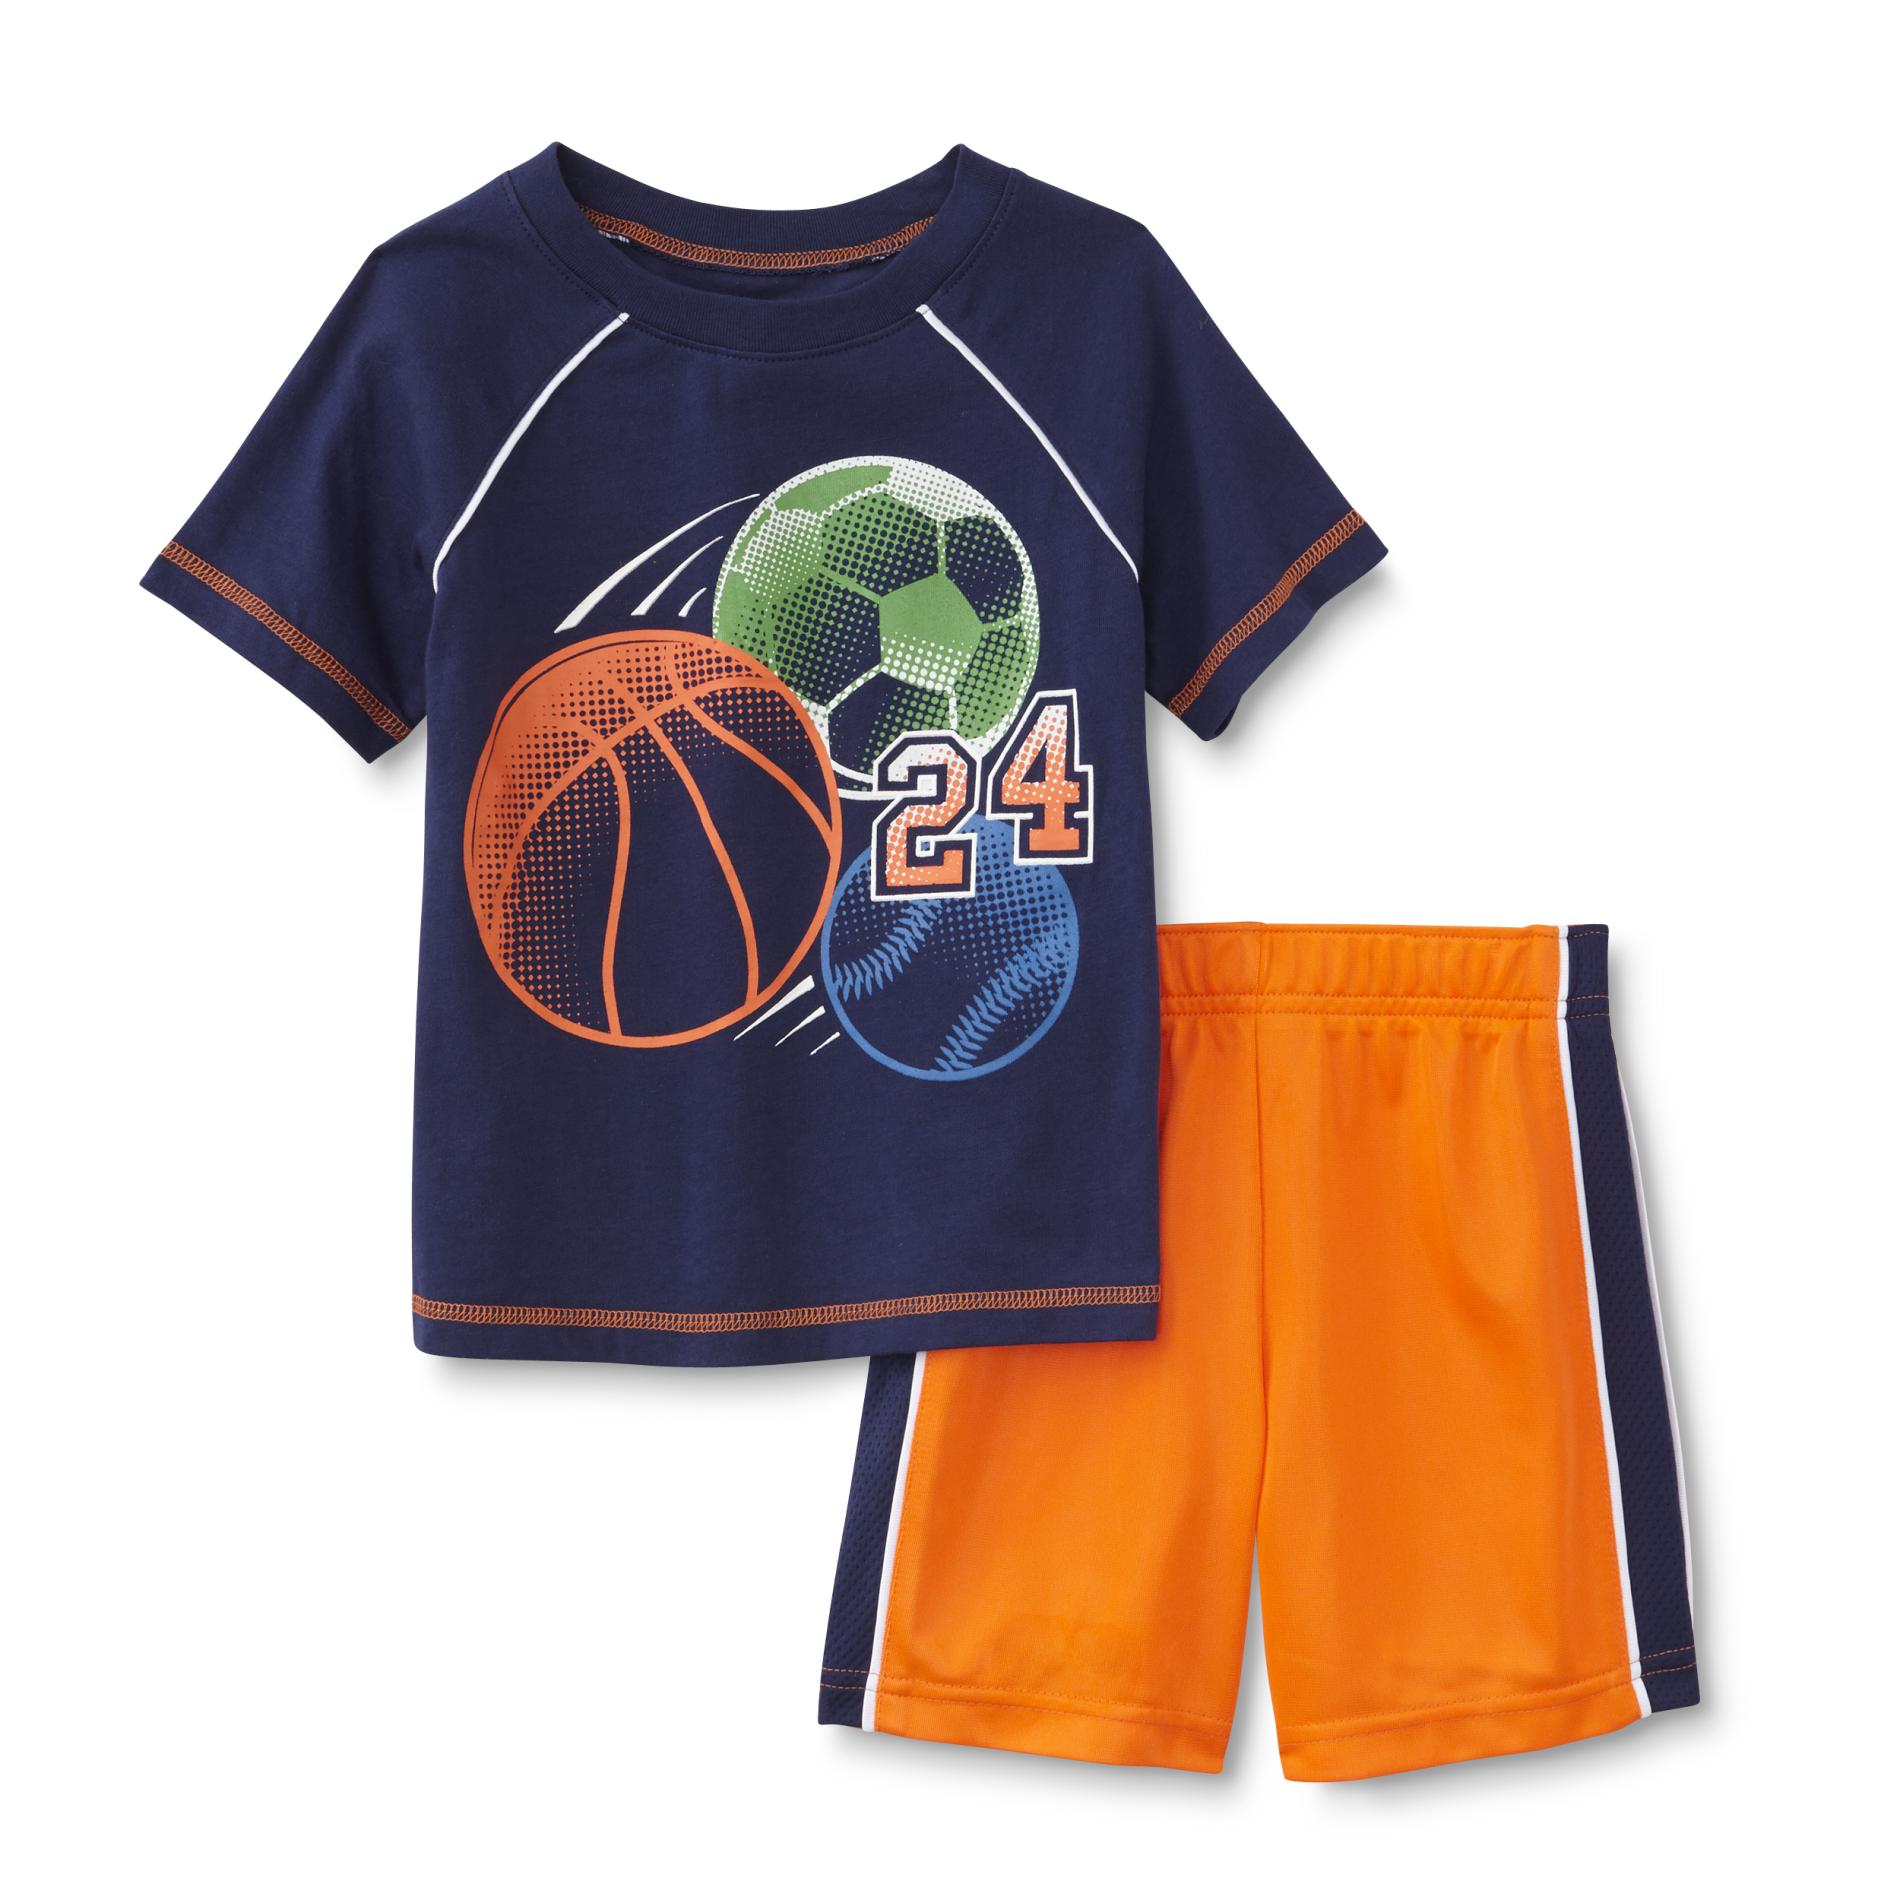 Toughskins Infant & Toddler Boy's T-Shirt & Shorts - Sports